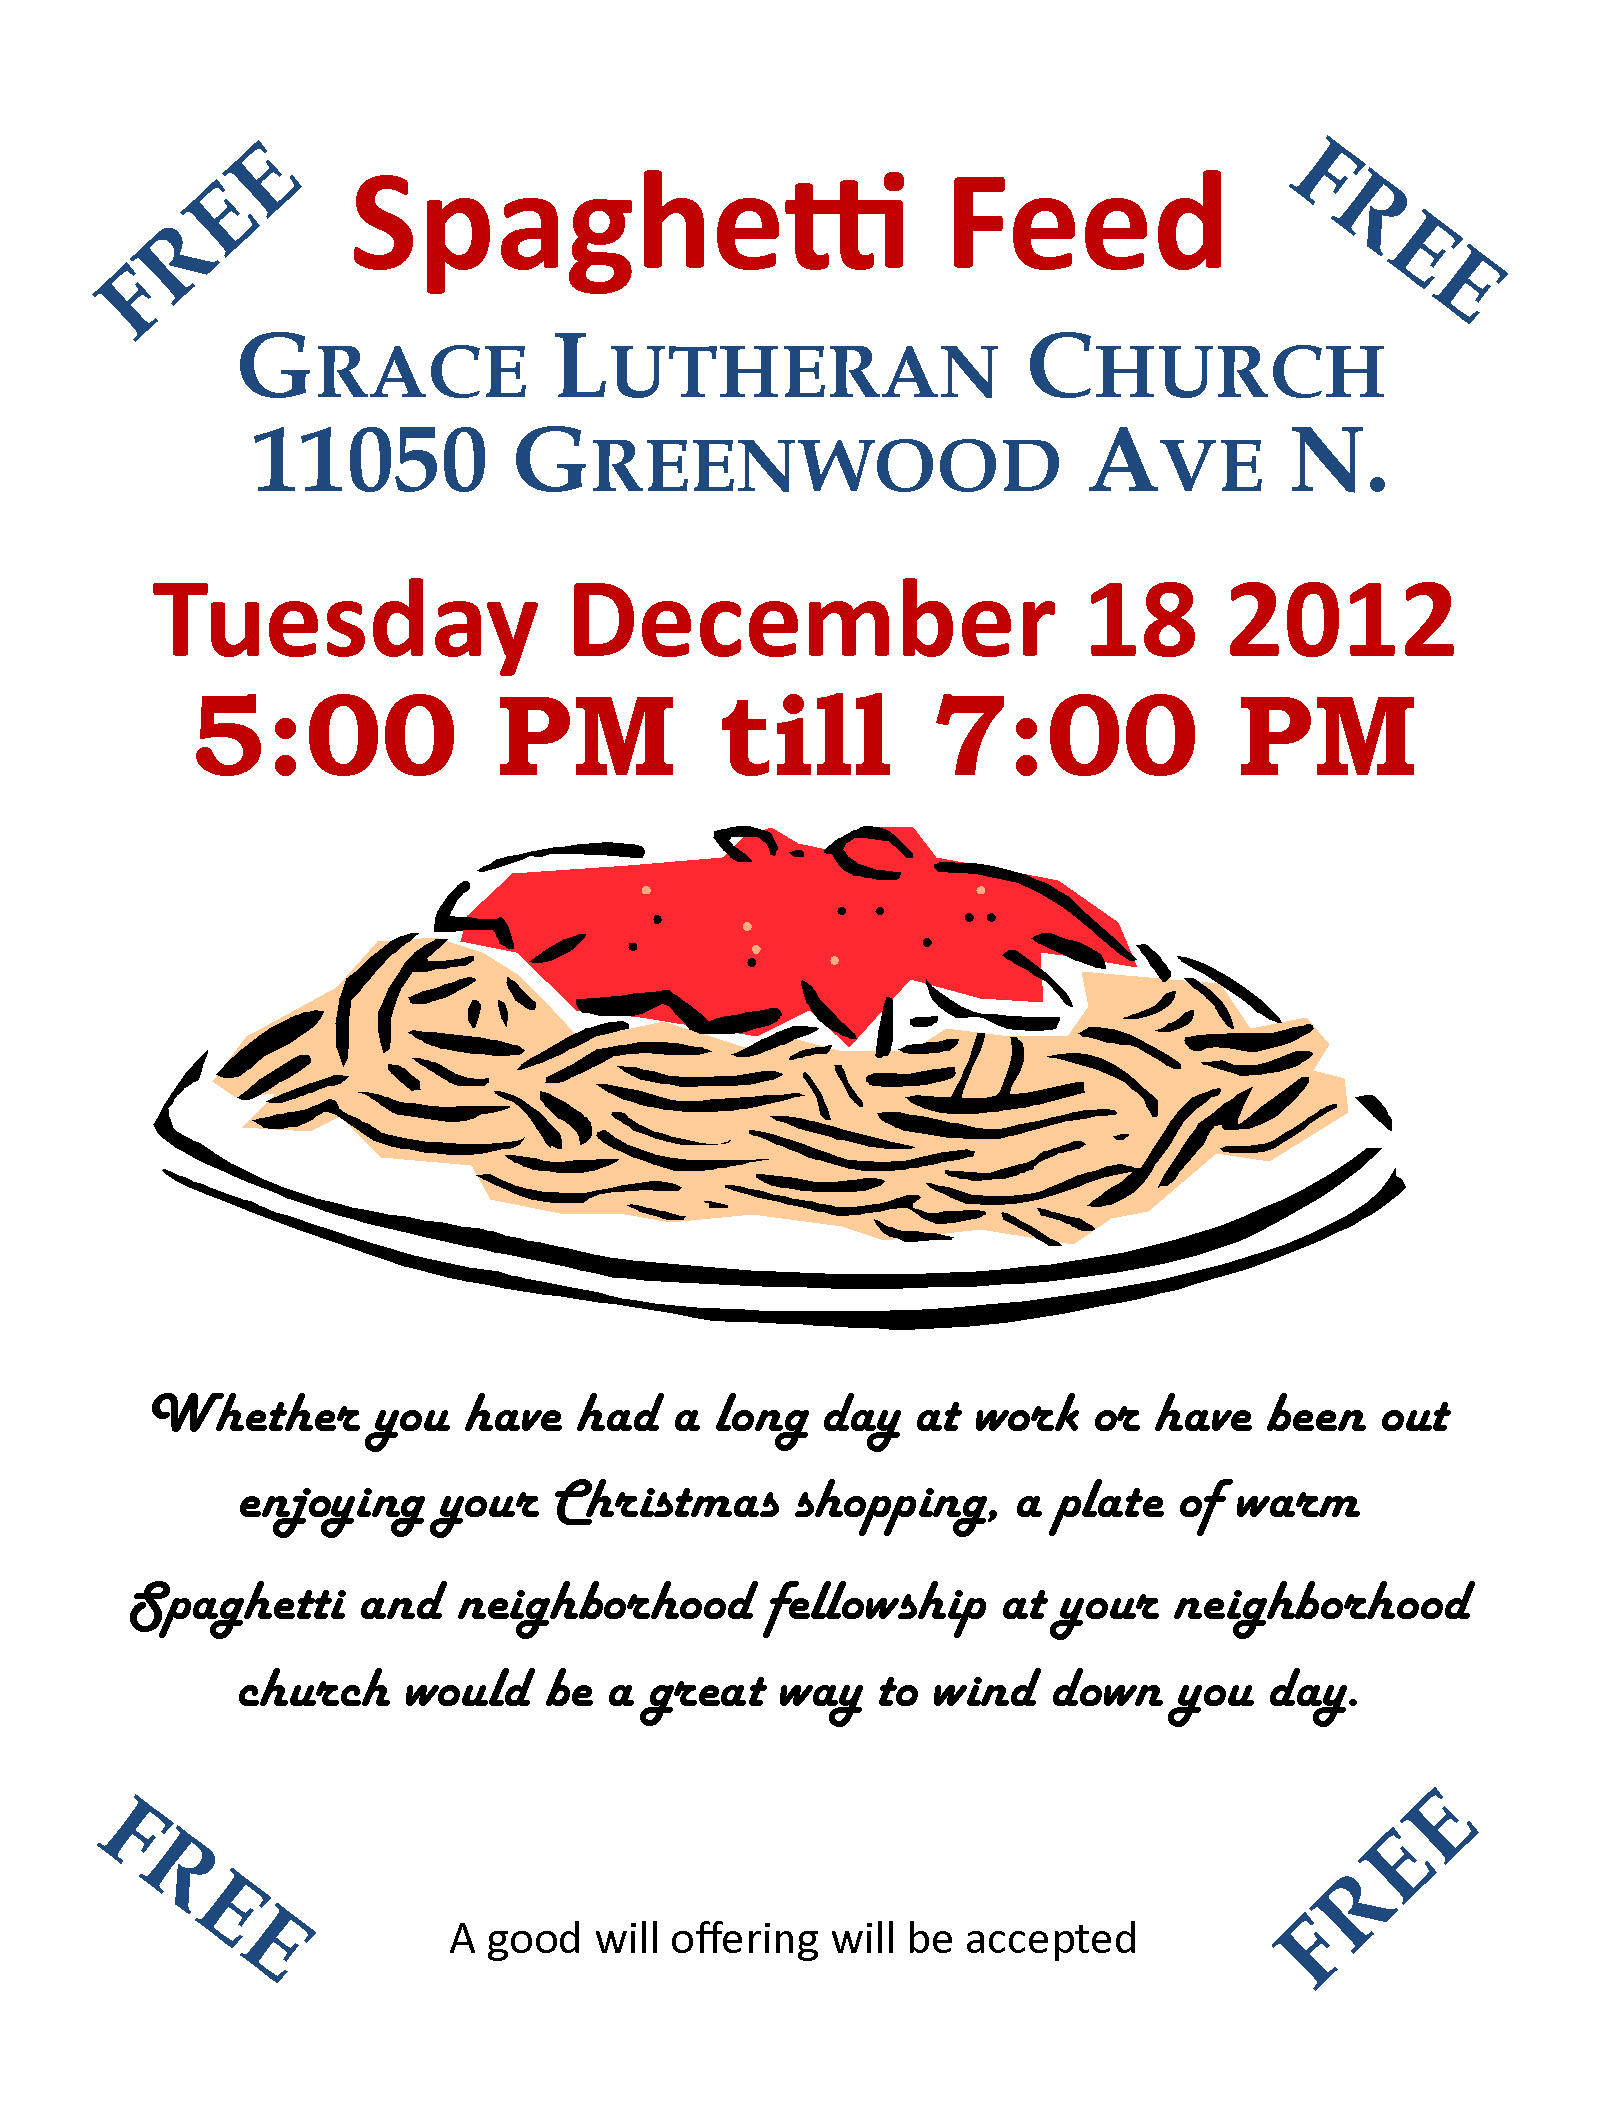 Spaghetti Feed at Grace Lutheran Church